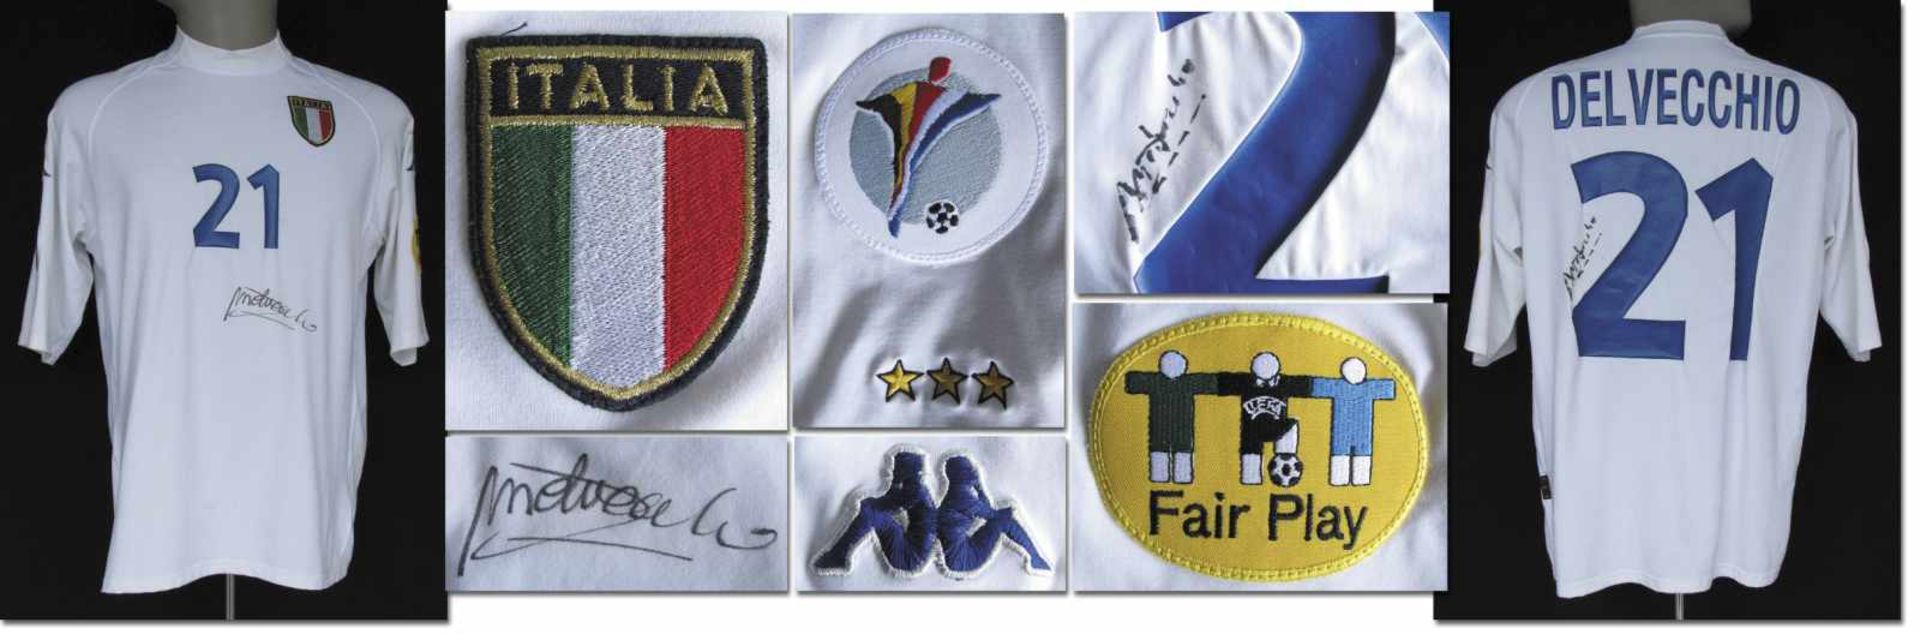 UEFA EURO 2000 match worn football shirt Italy - Original match worn shirt Italy with number 21.